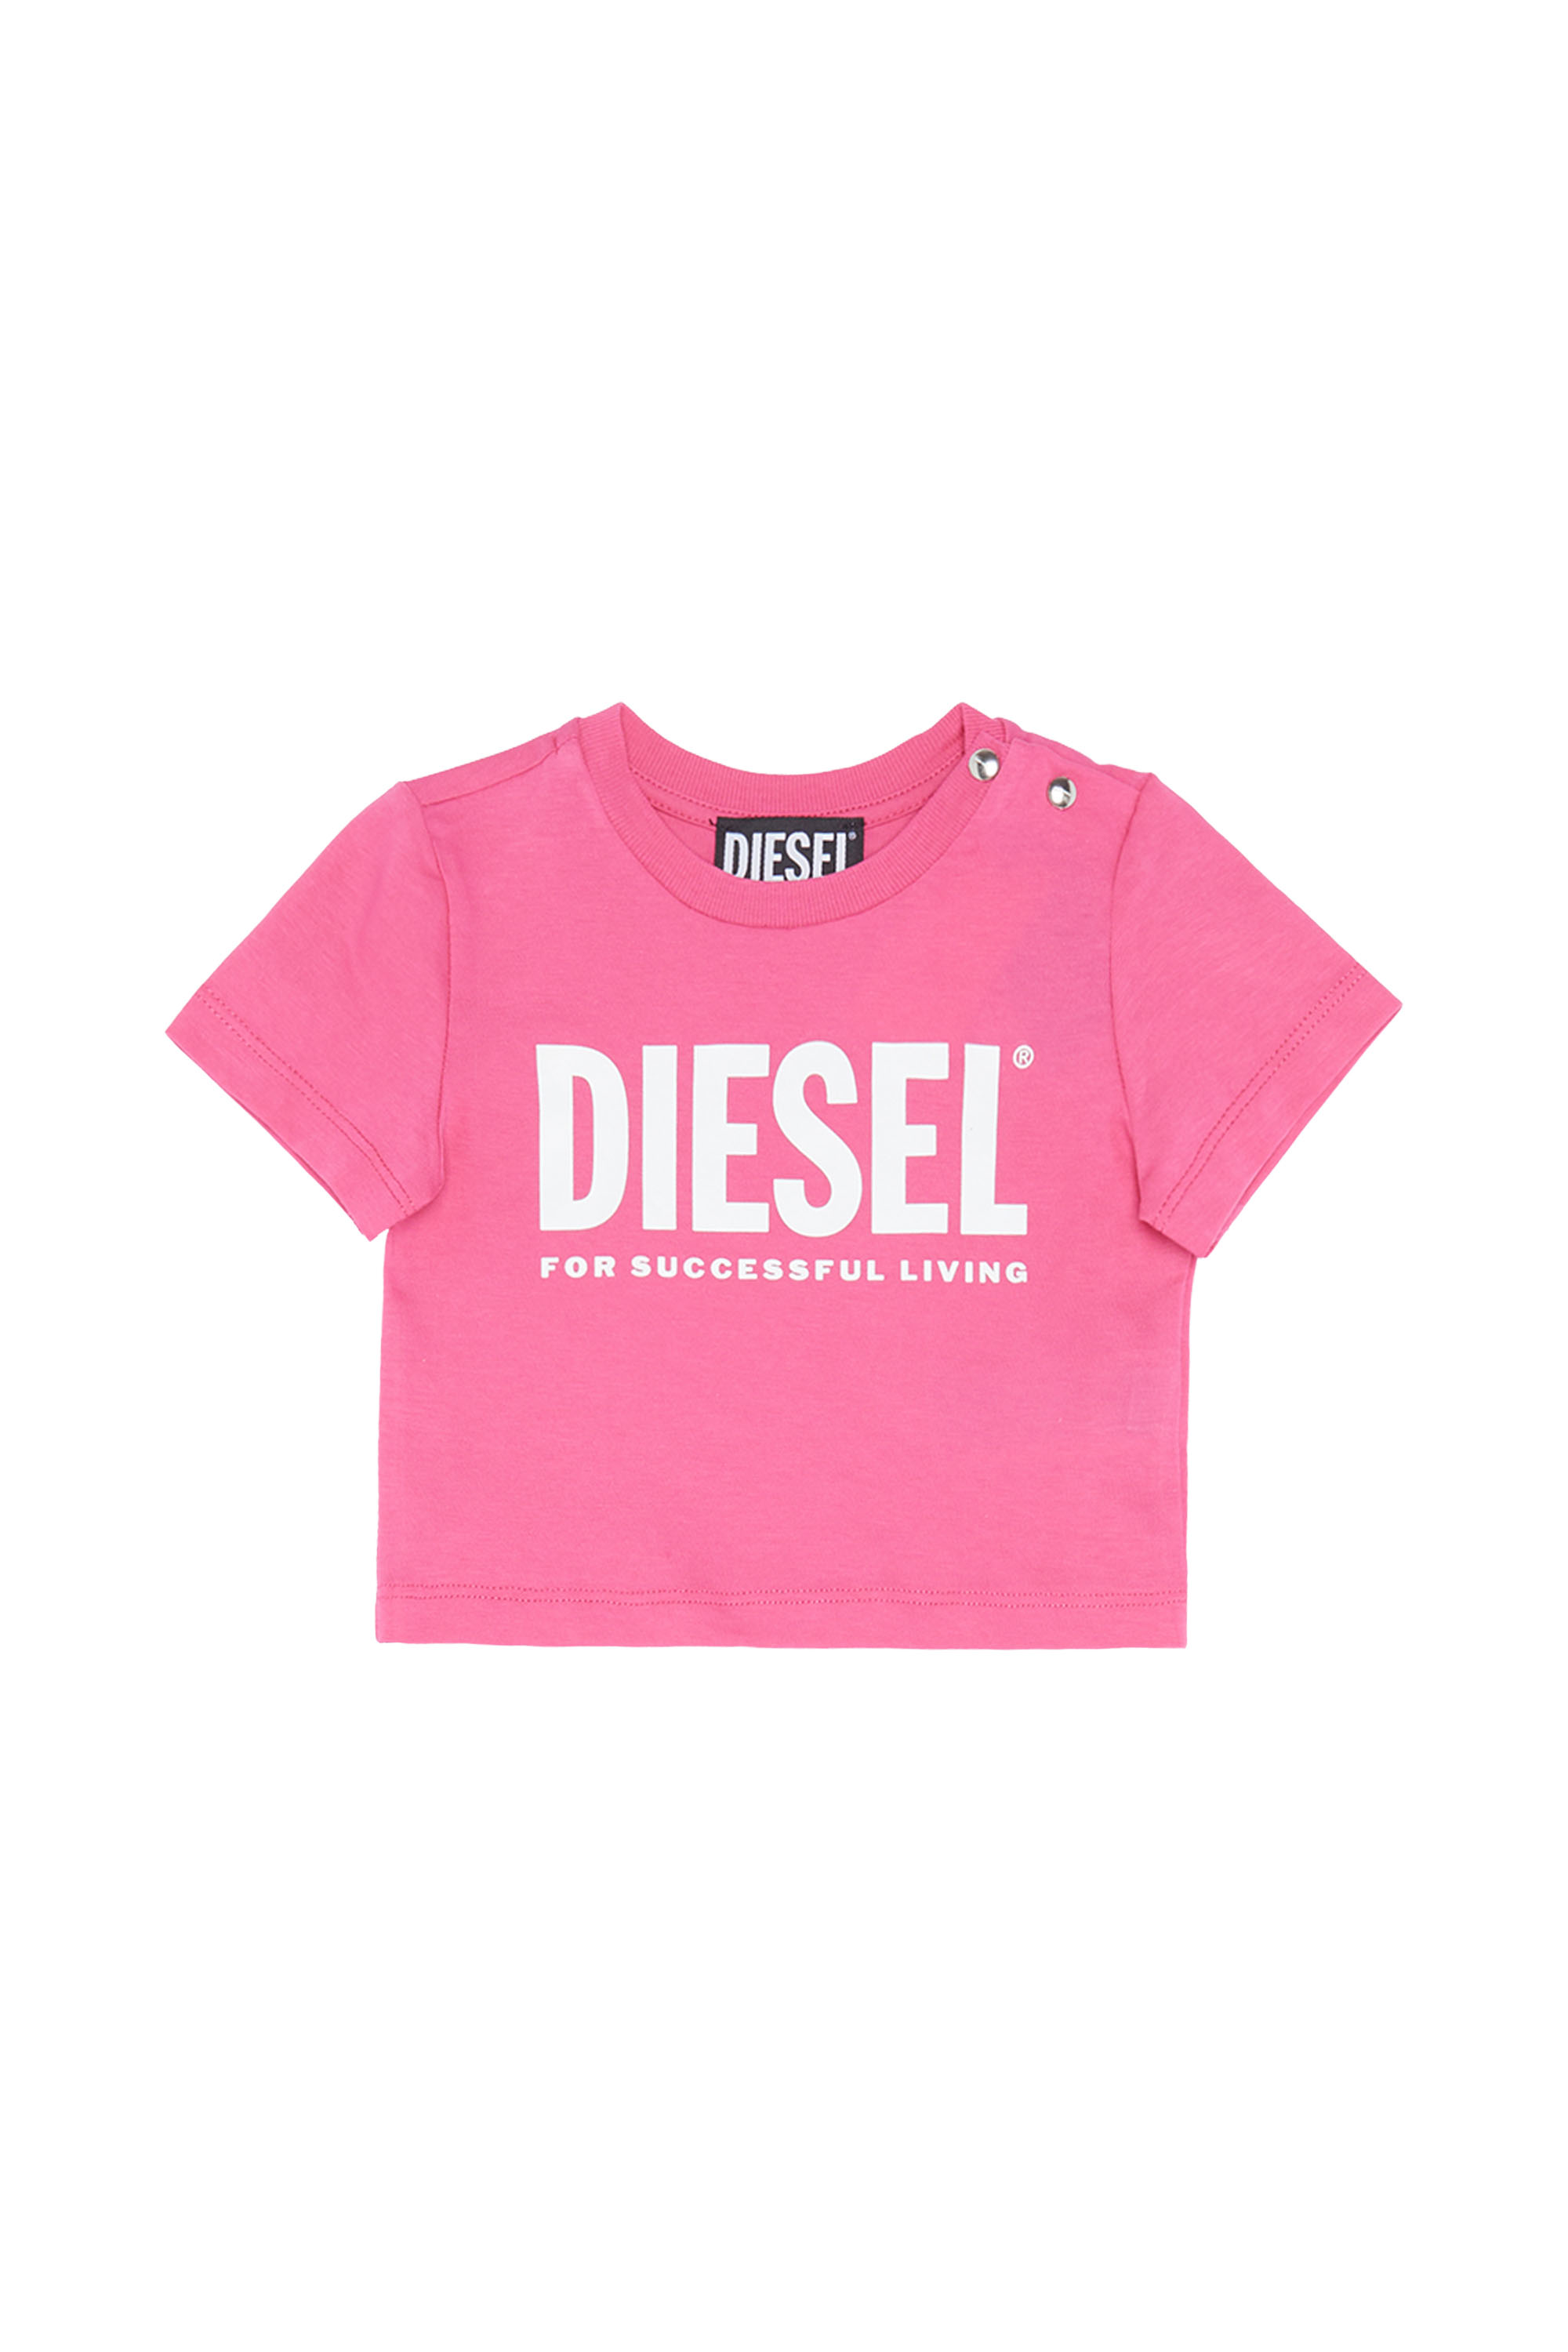 Diesel - TECROLOGOB, Pink - Image 1